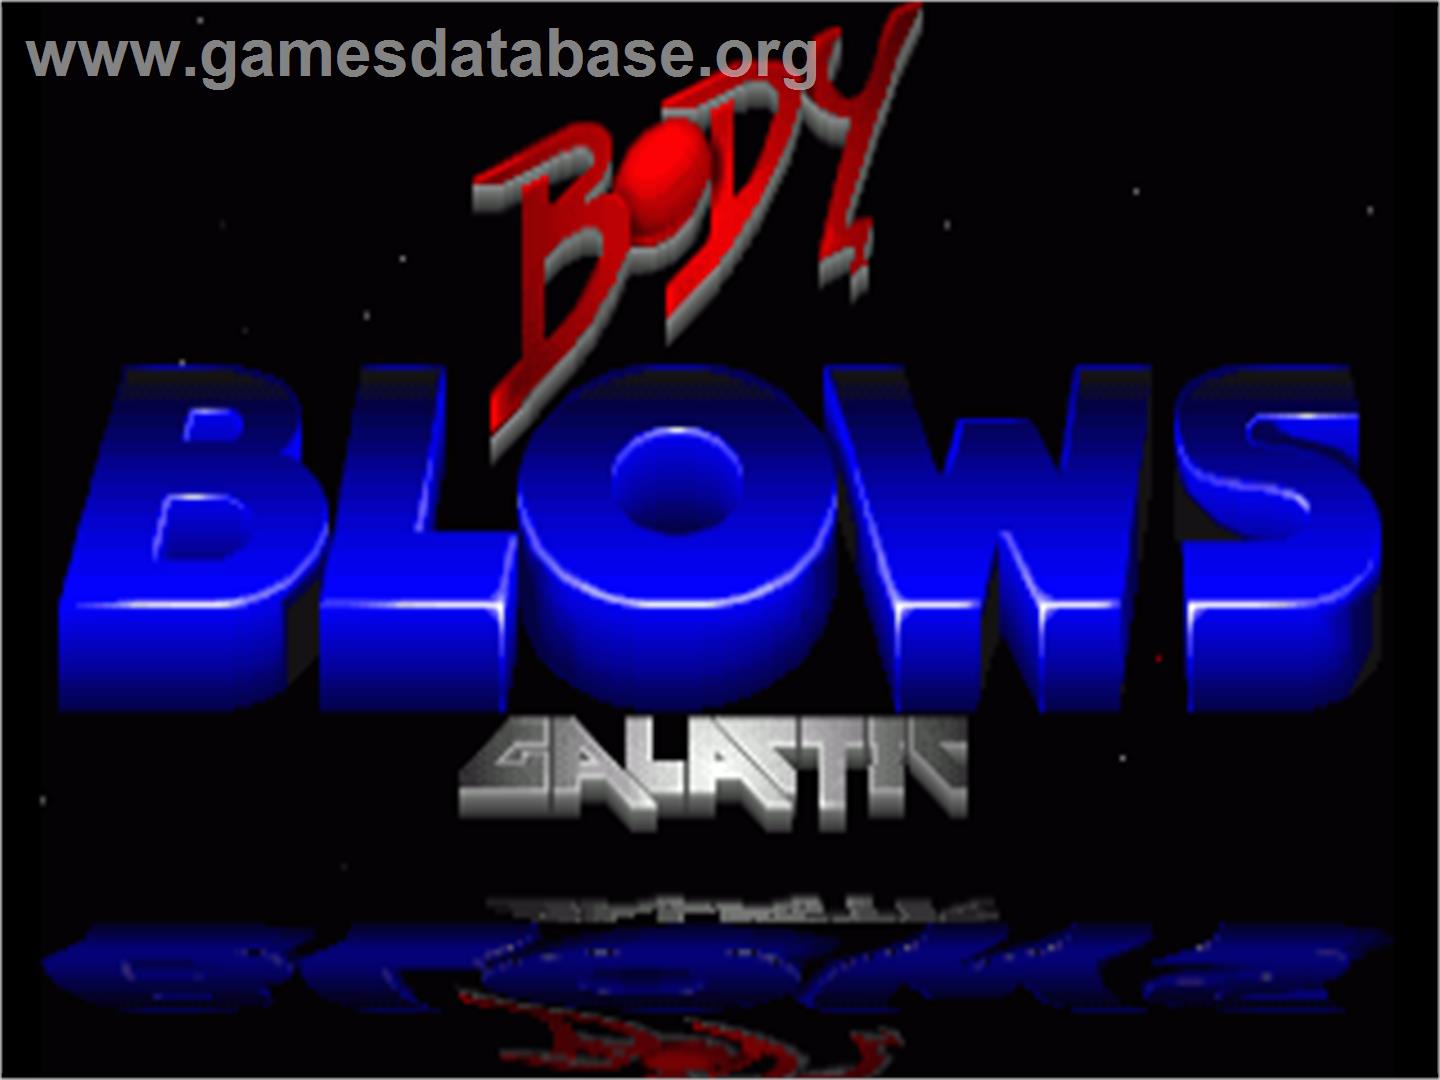 Body Blows Galactic - Commodore Amiga - Artwork - Title Screen